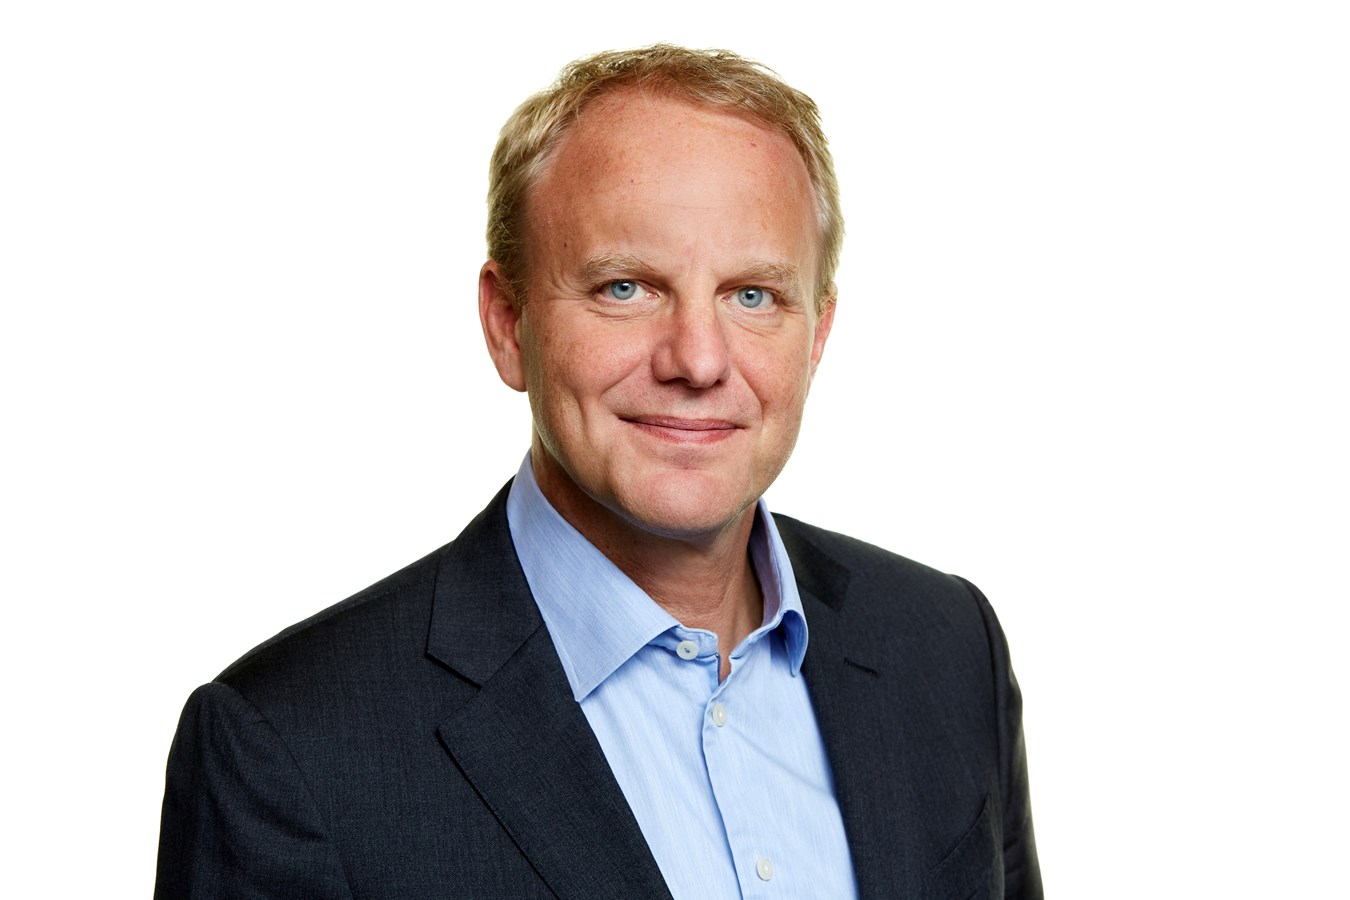 Jonas Samuelson, Member of the Board of Directors of Volvo Car Corporation